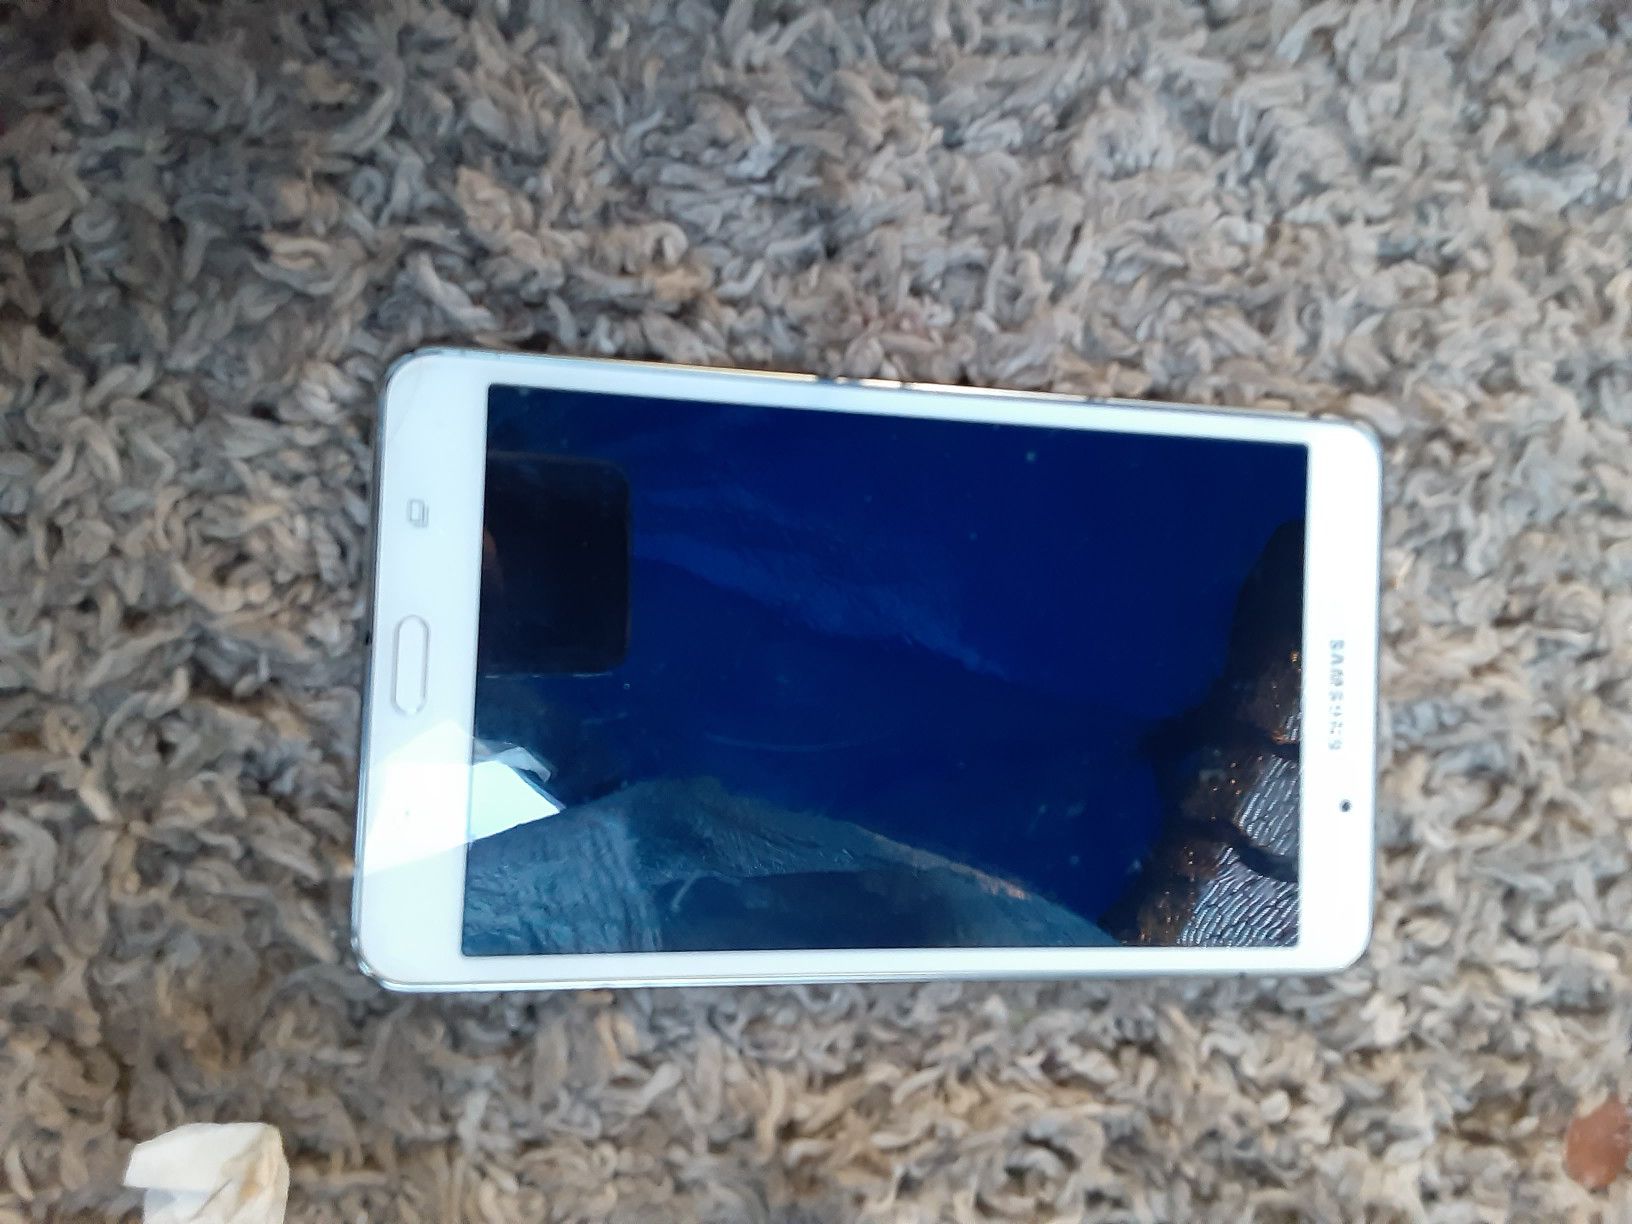 Samsung Galaxy Tablet 8gb white